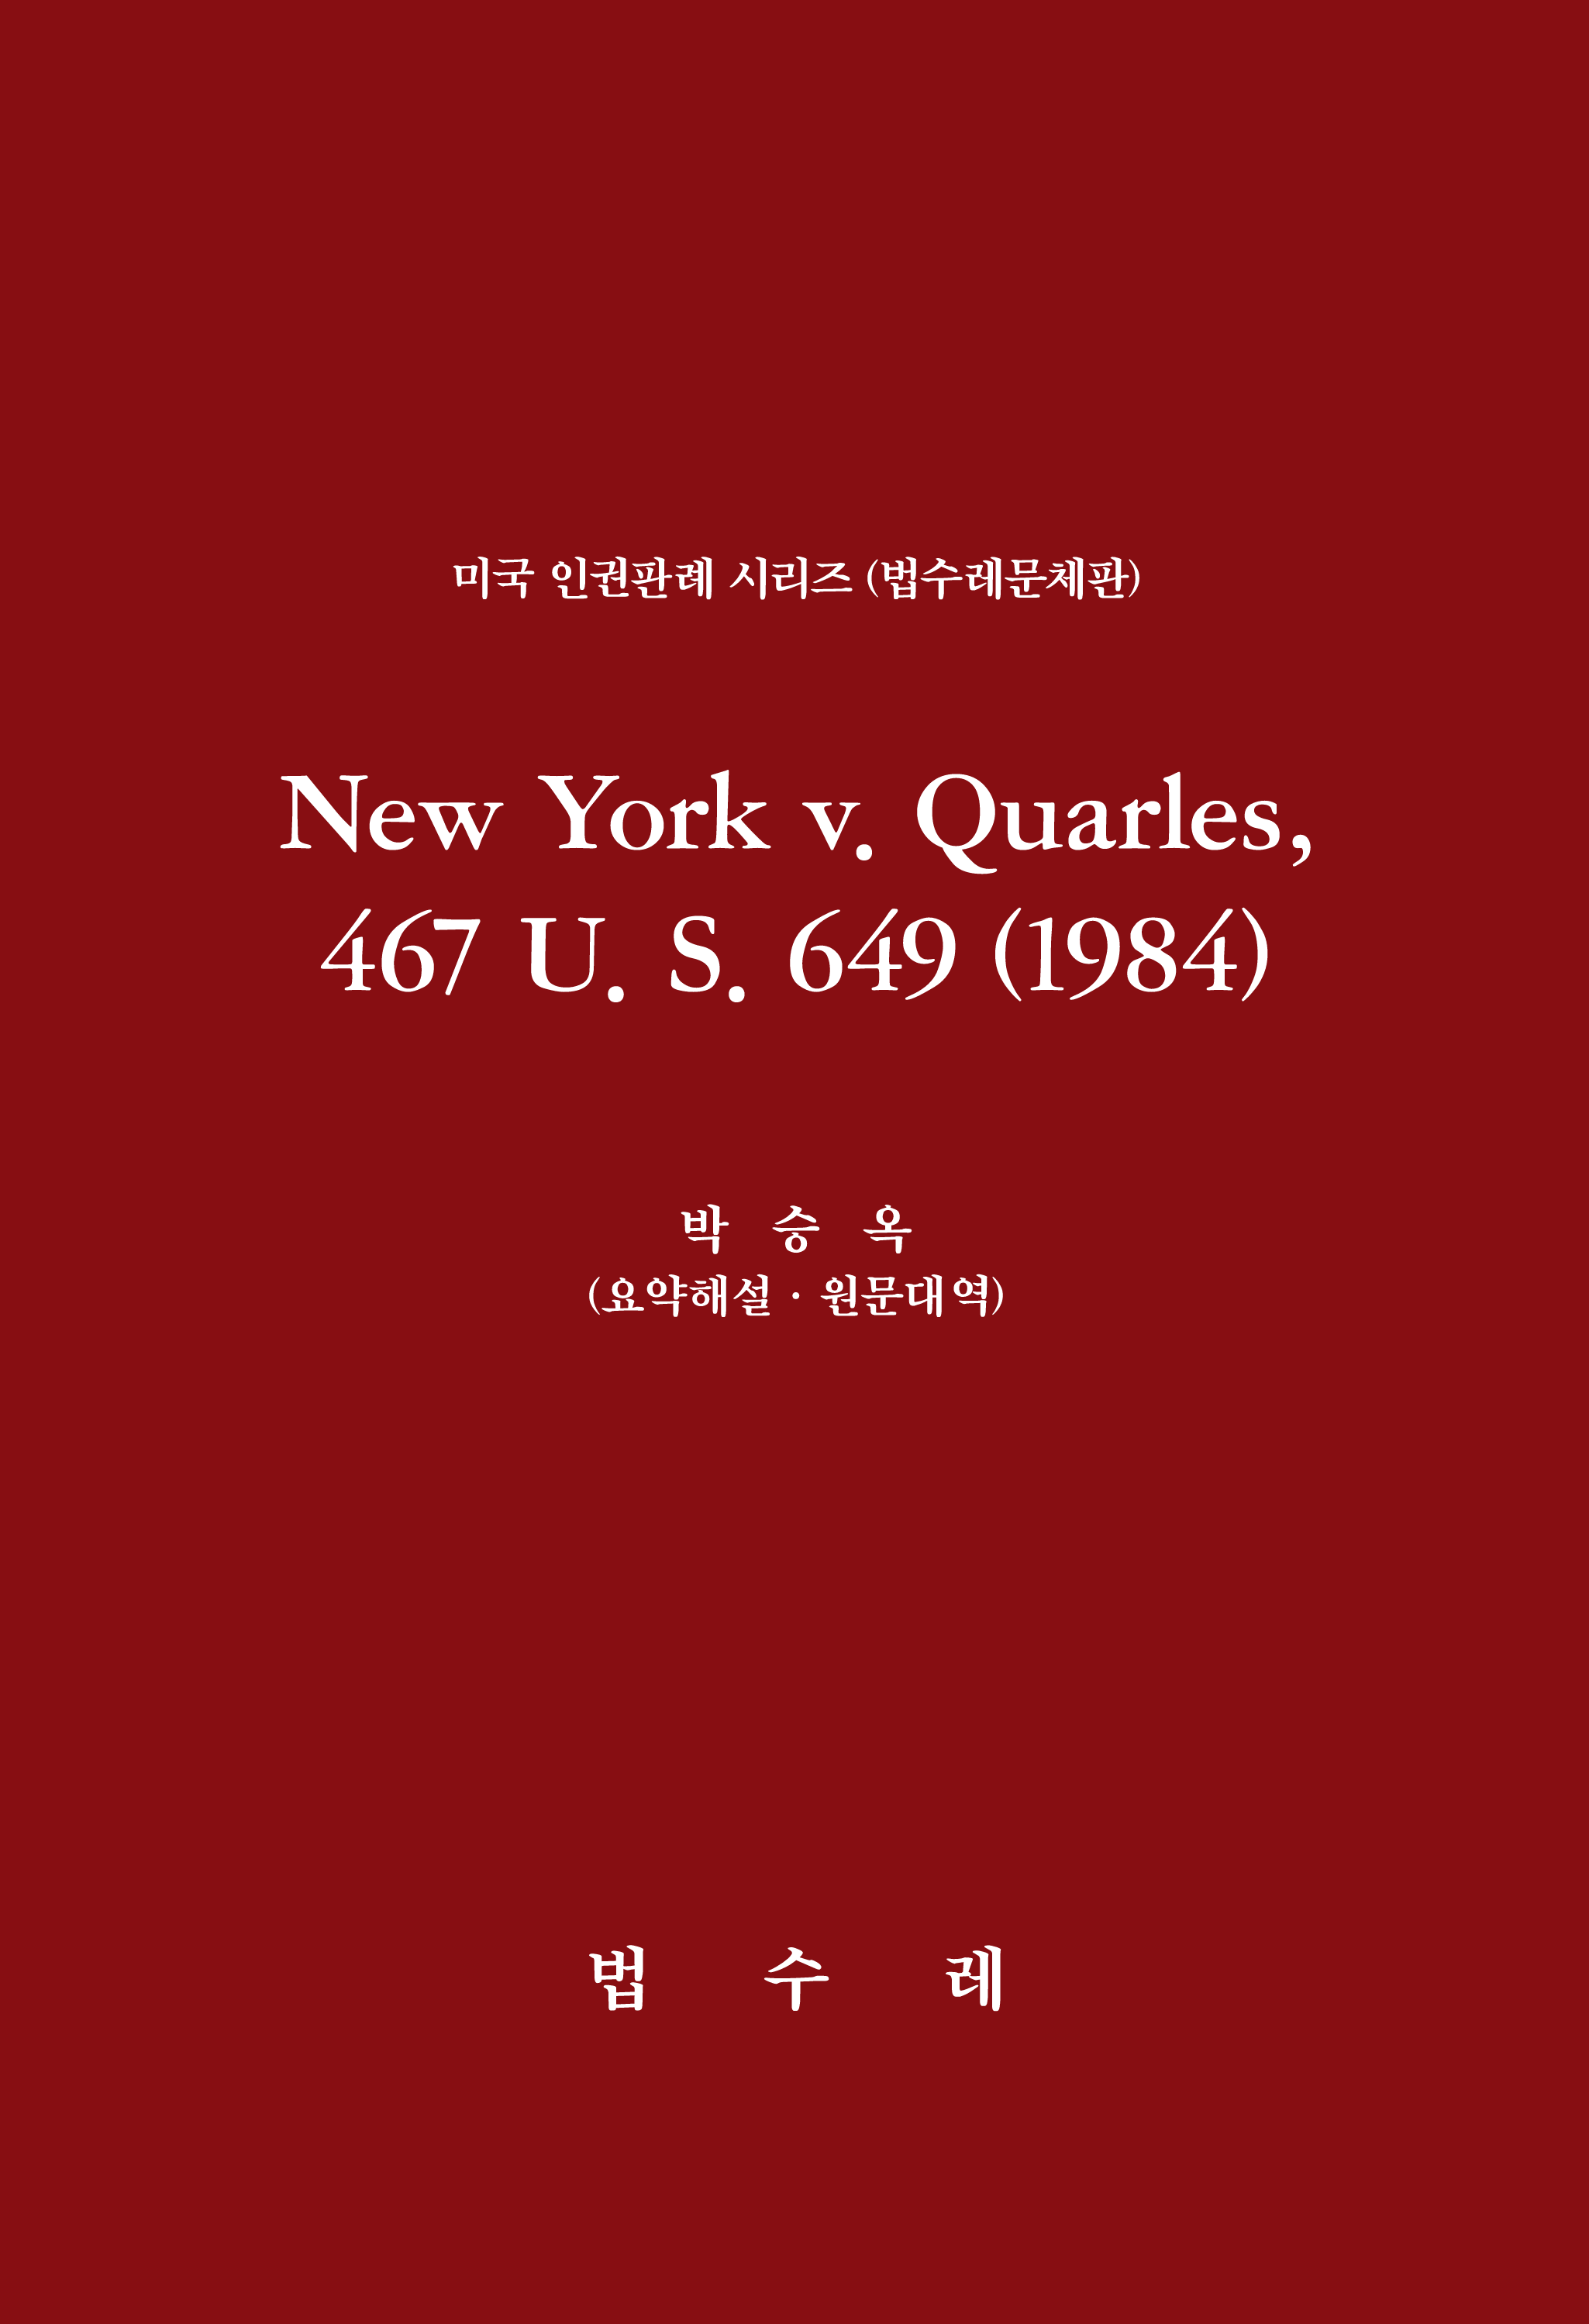 New York v. Quarles, 467 U. S. 649 (1984)